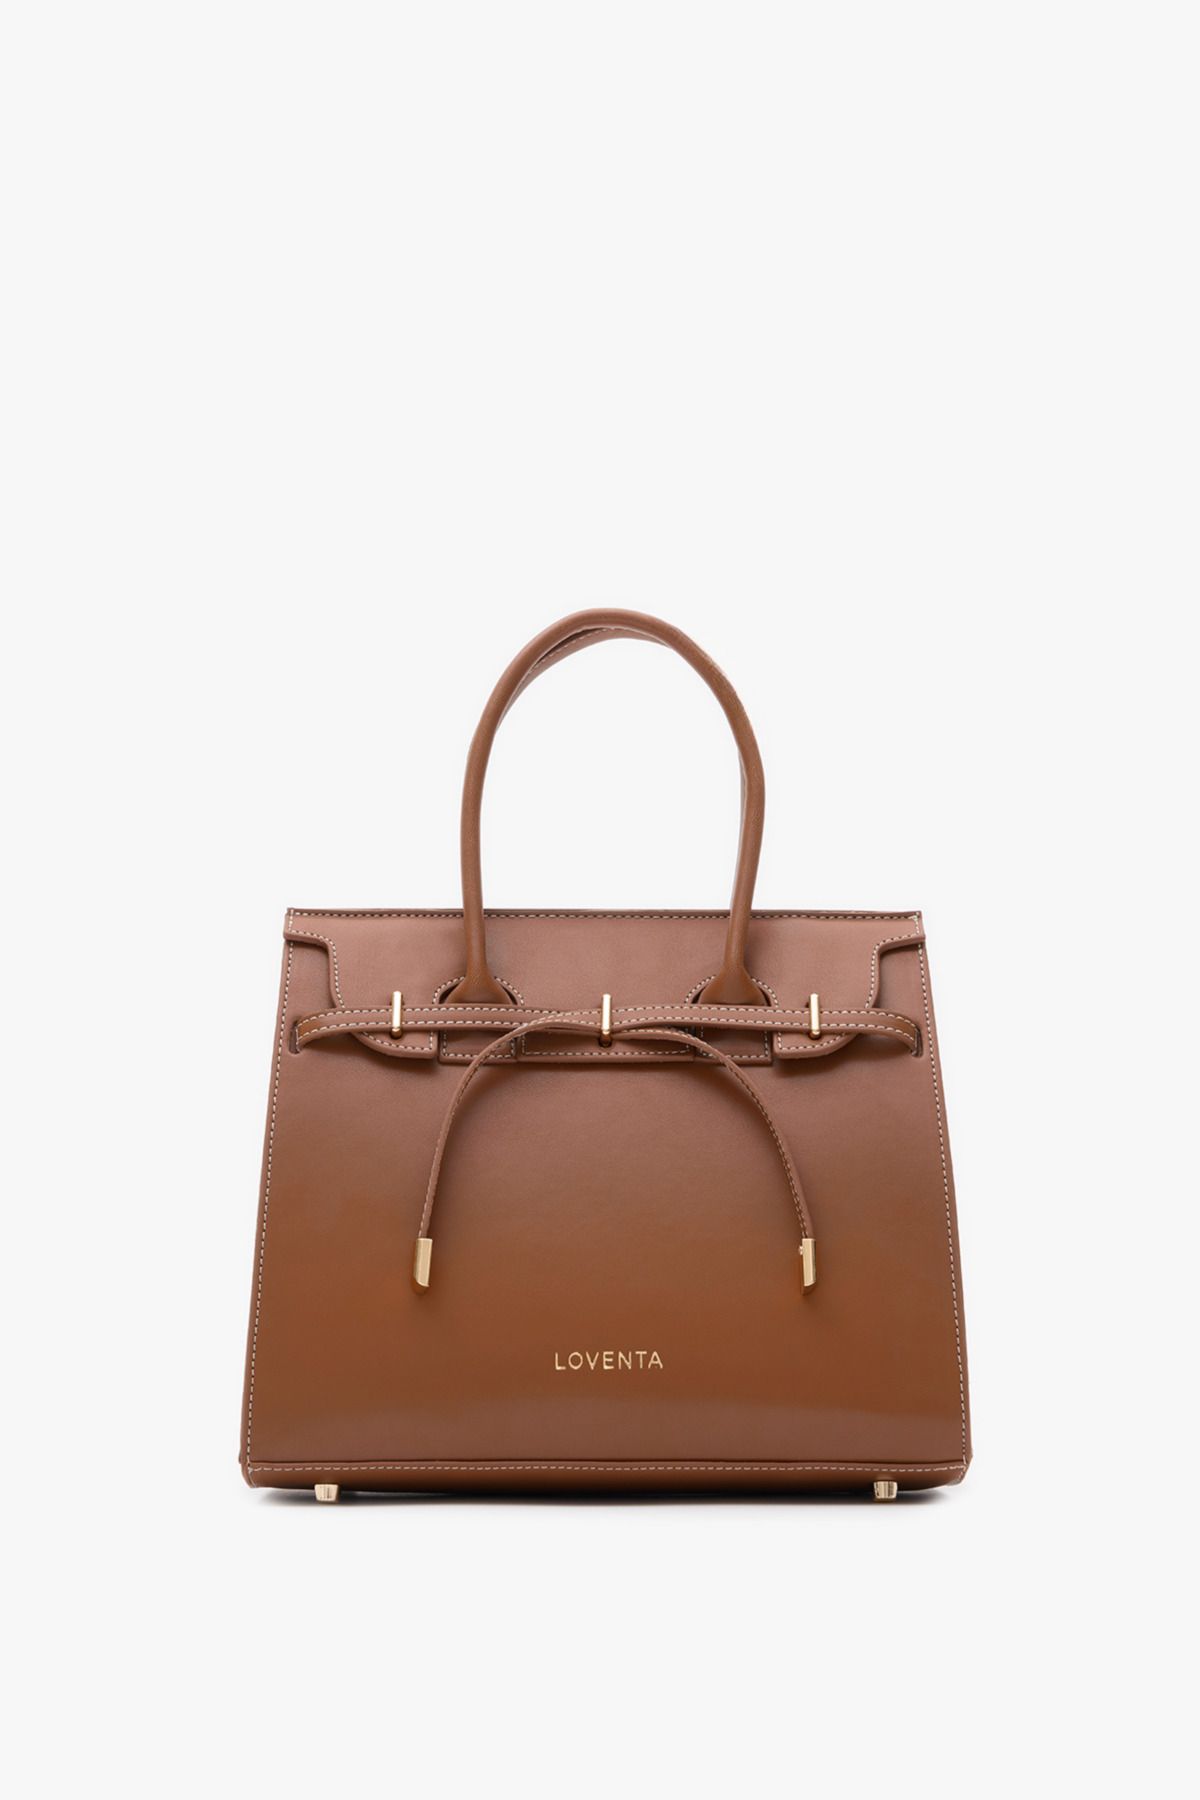 Loventa Midsize Hand Bag Taba Ciara